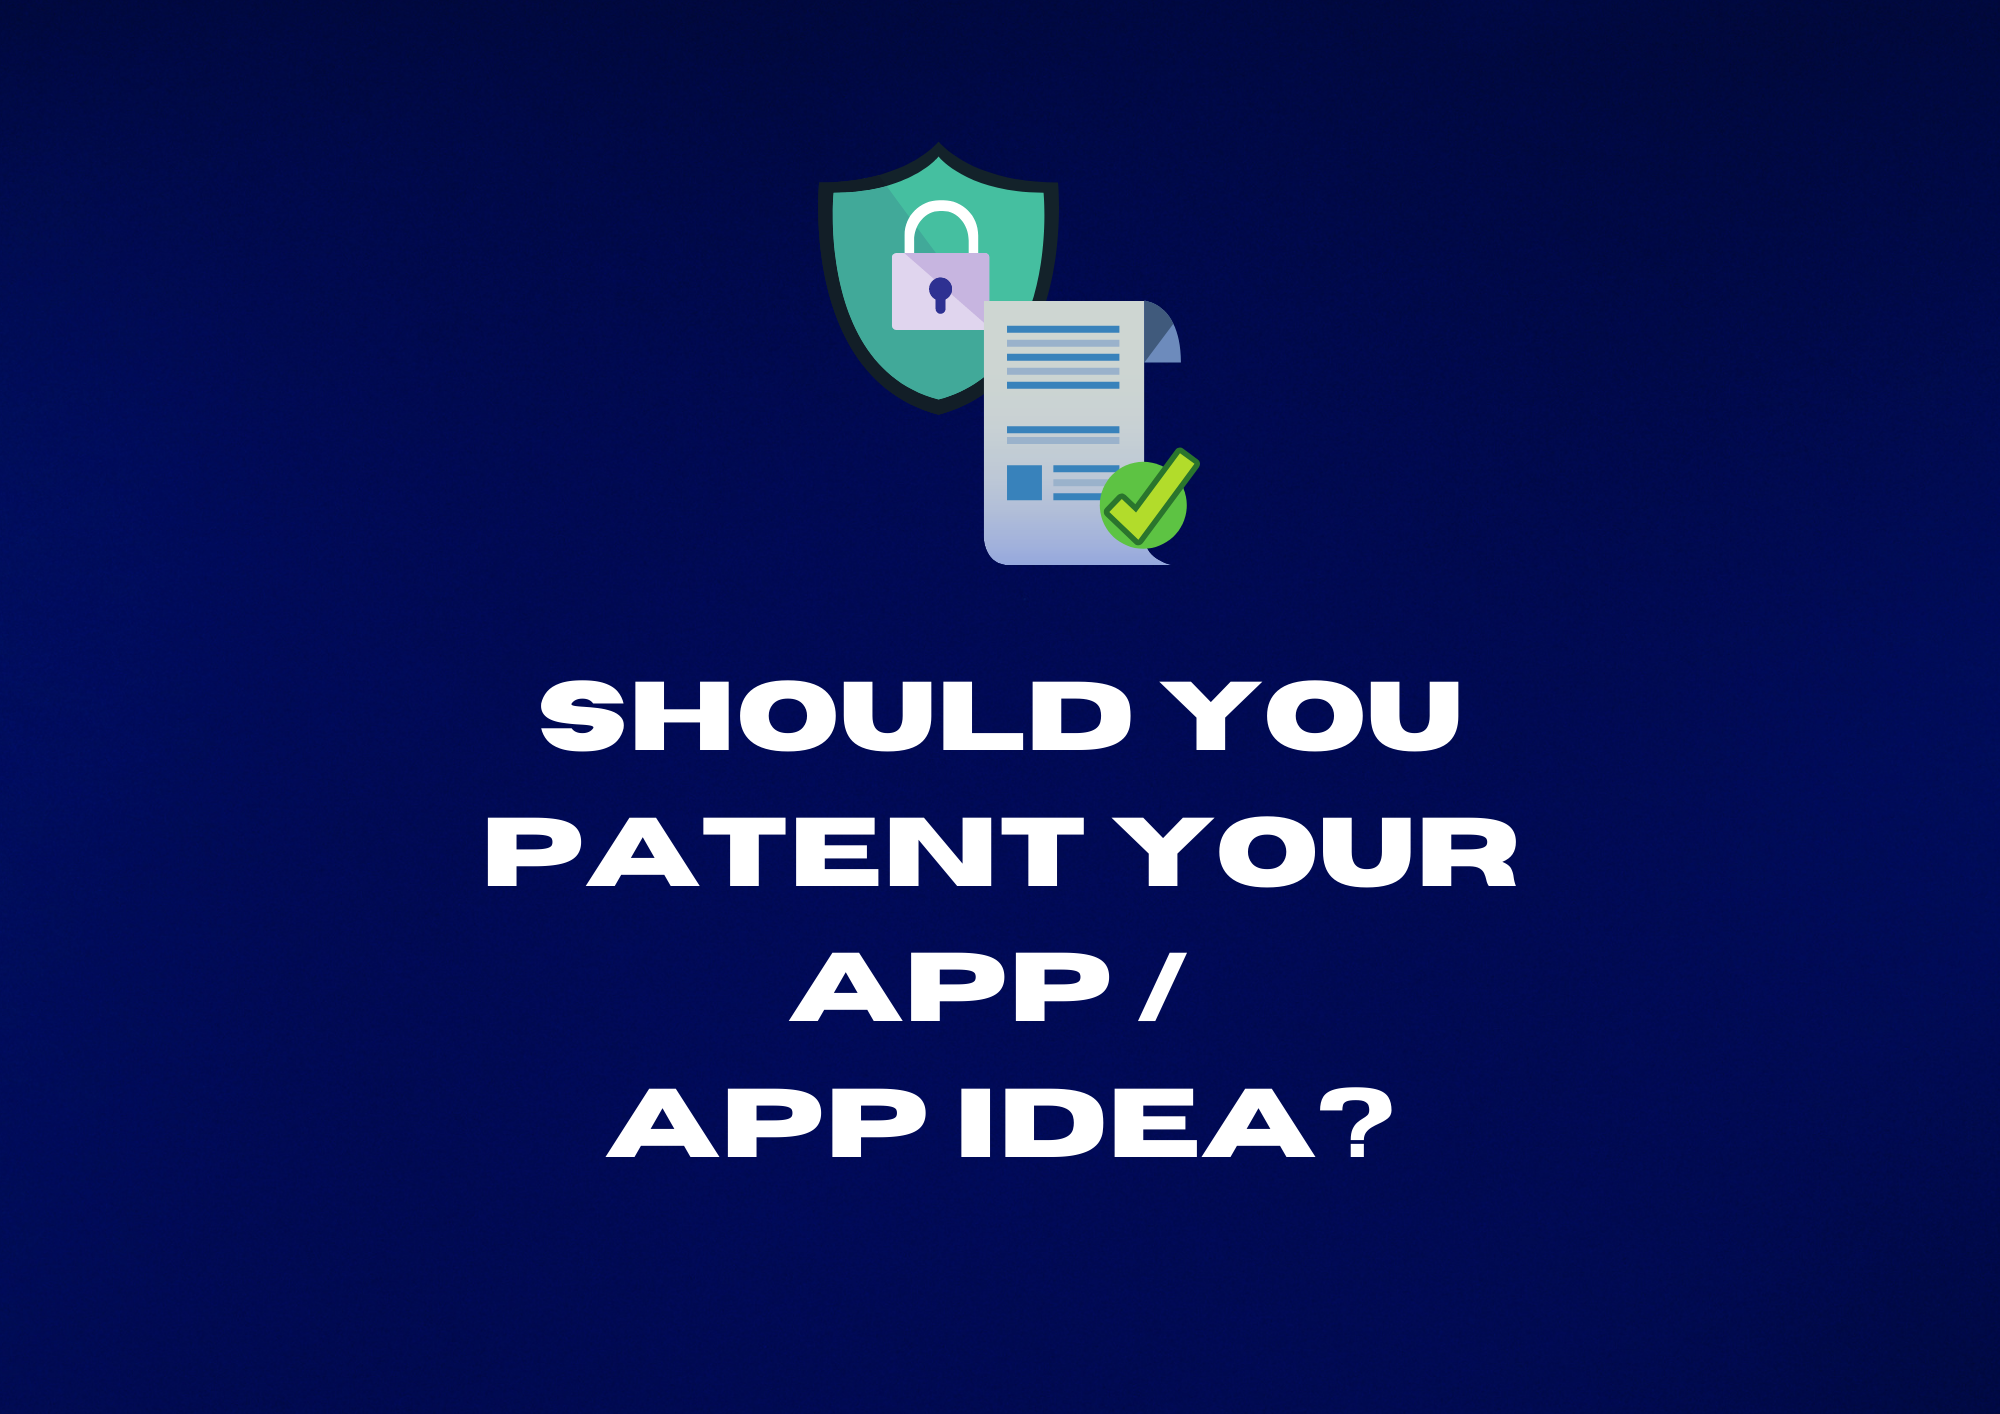 Patent my app